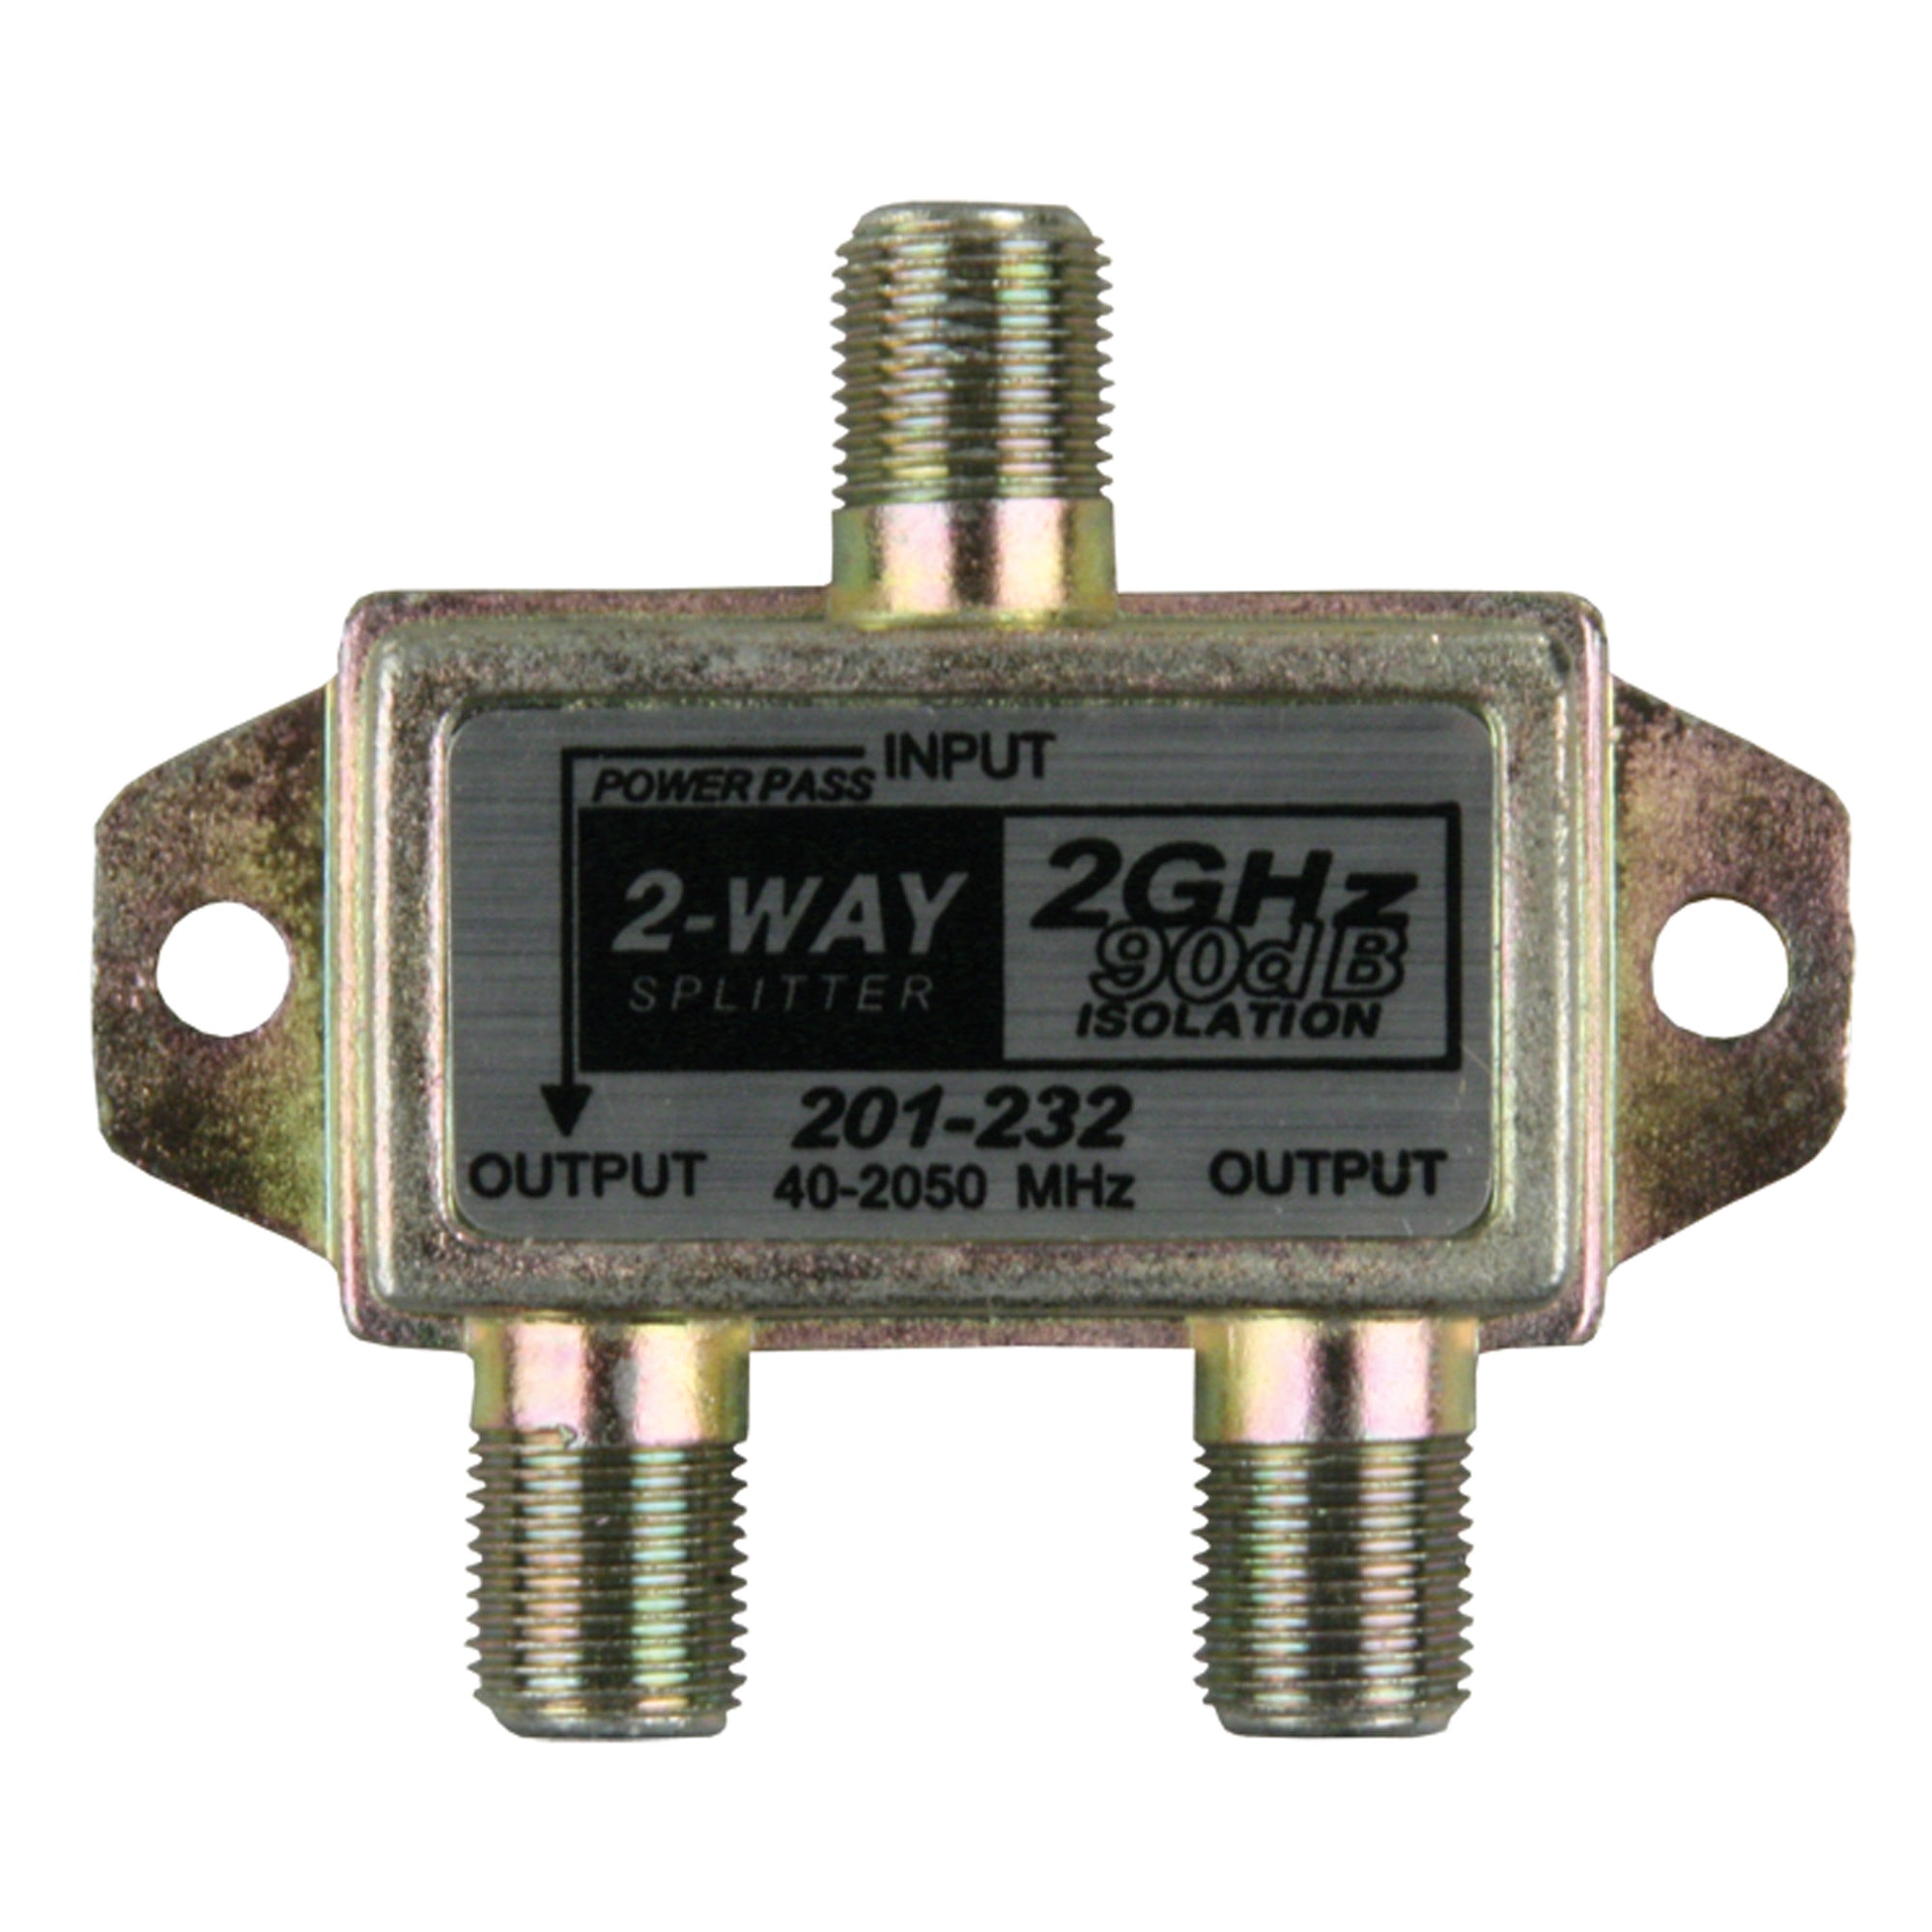 JR Products 47355 2 GHz HD Satellite Line Splitter - 2-Way